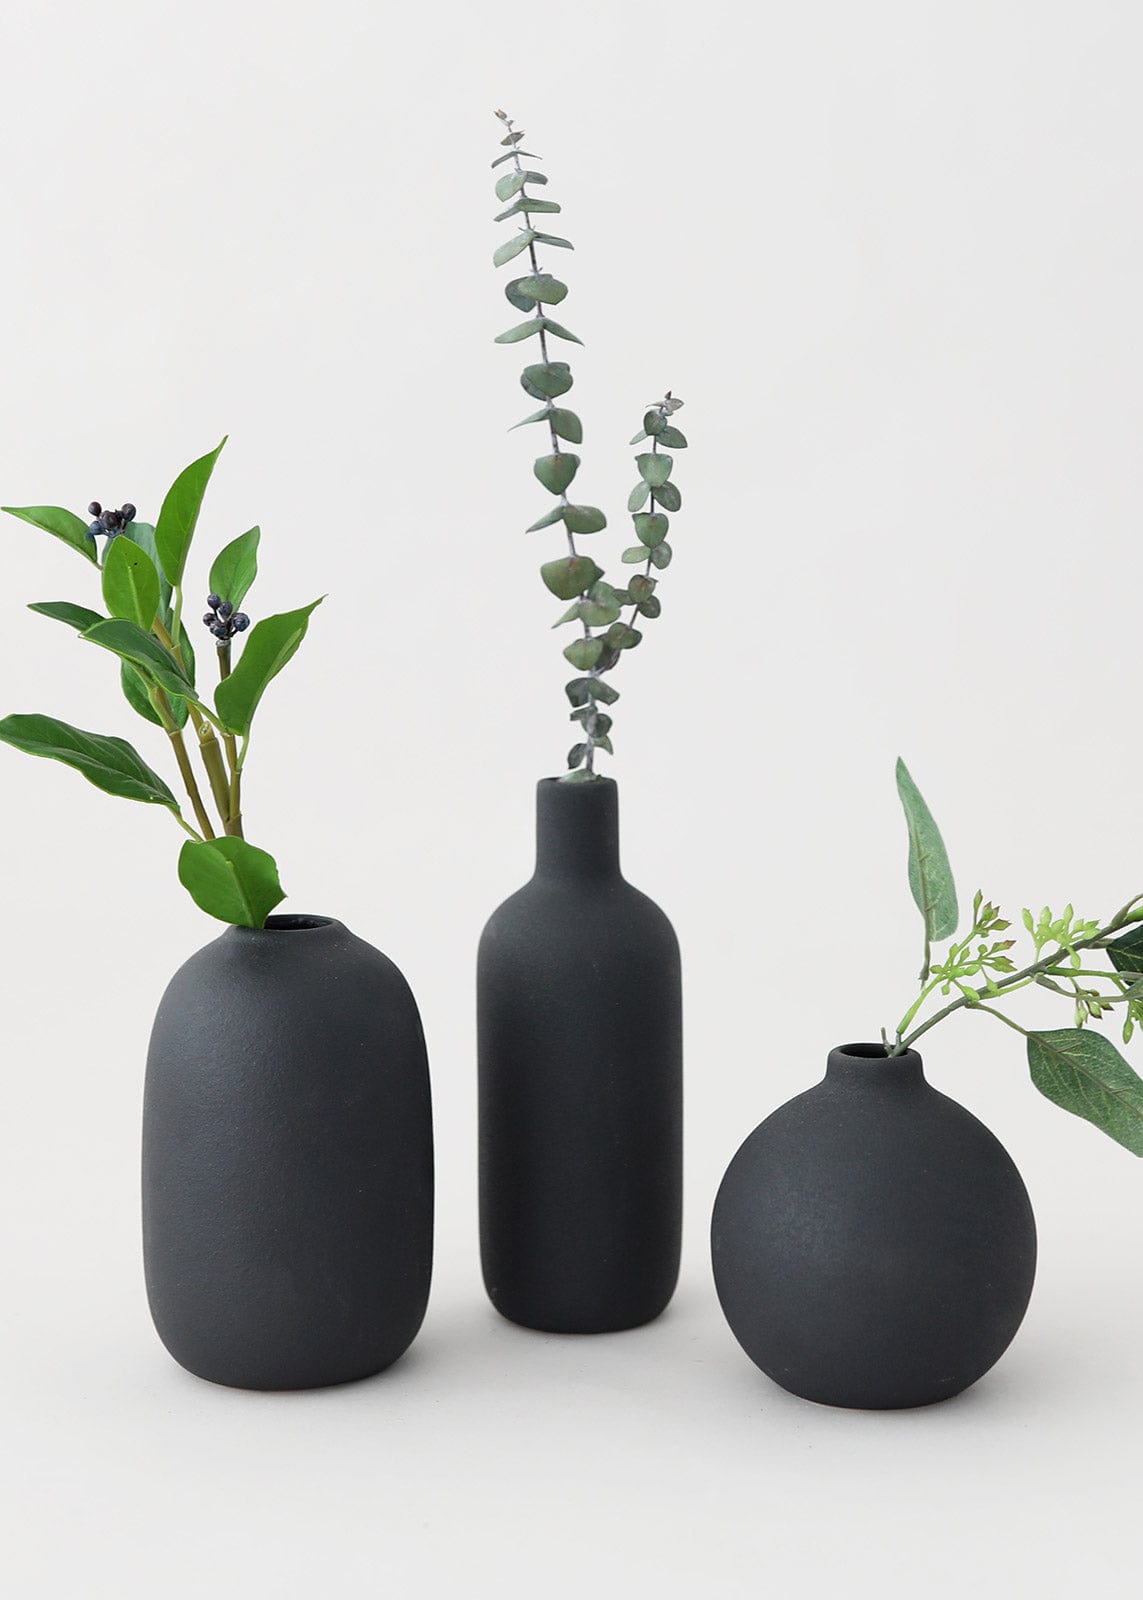 Artificial Leaves in Black Bud Vases at Afloral